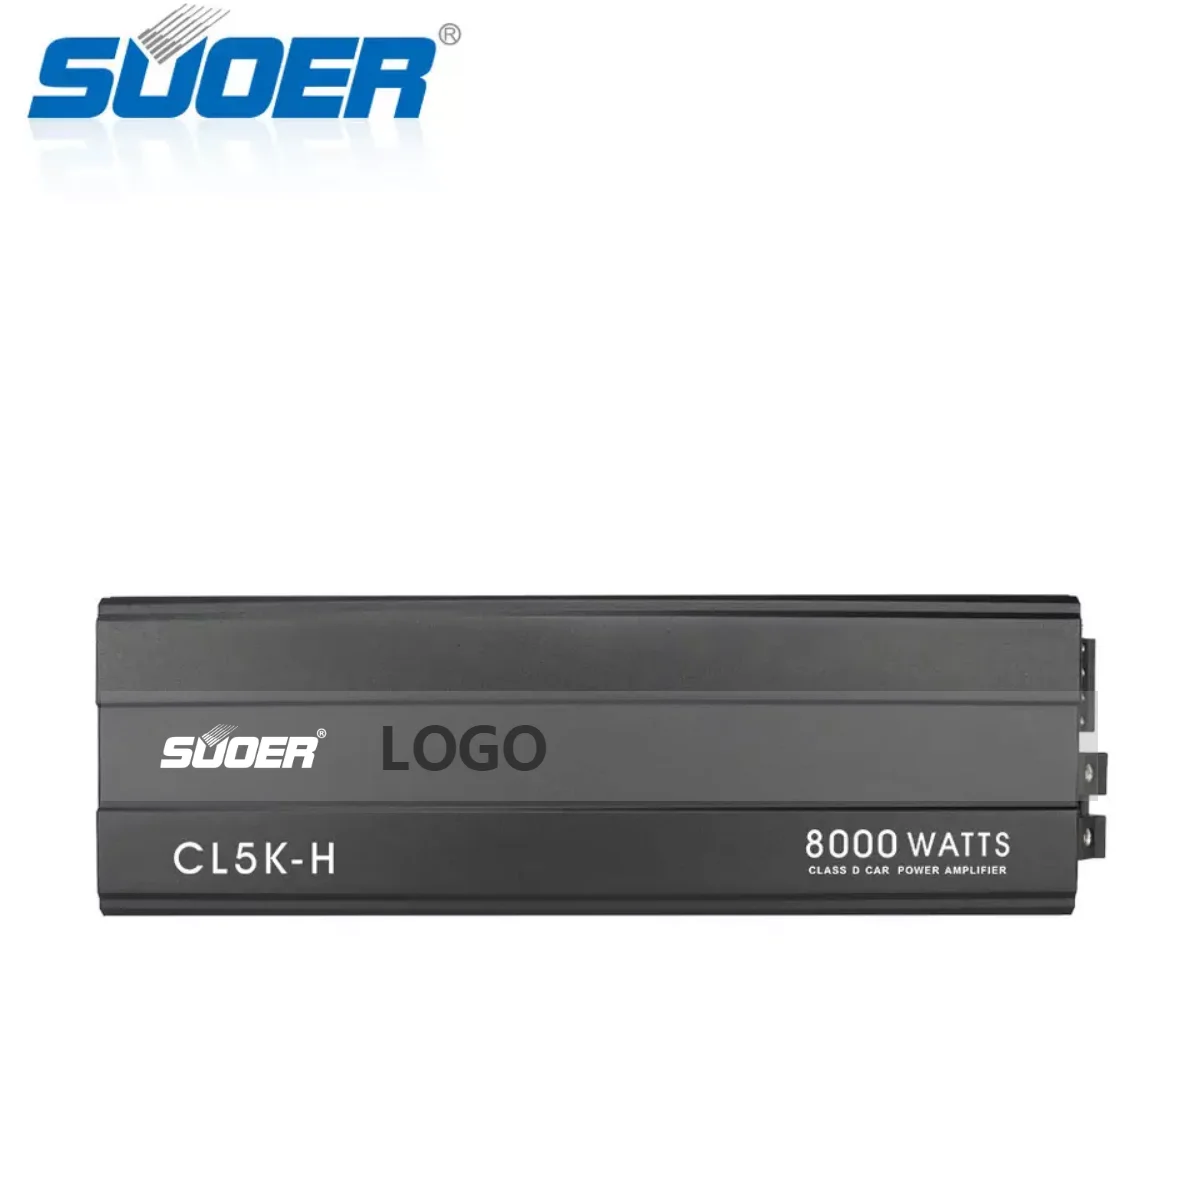 

Suoer CL-5K 12V 8000w professional high power MONO channel class D car amplifier